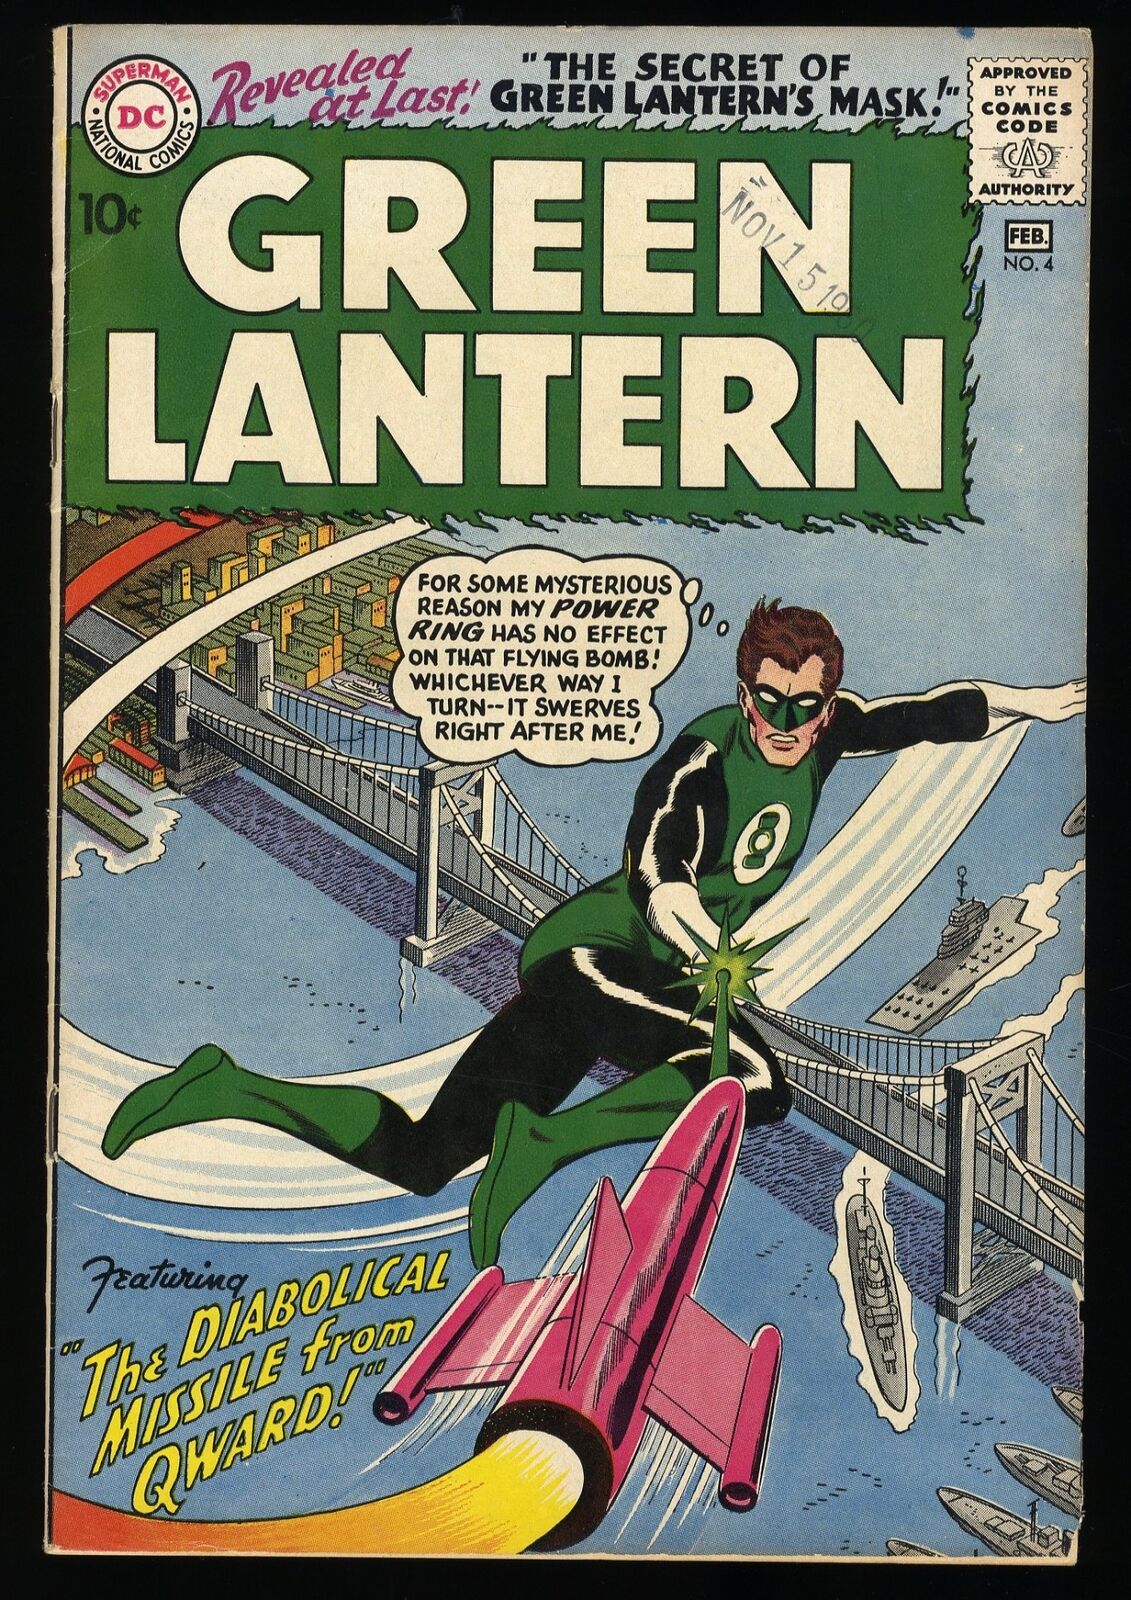 Green Lantern #4 VF- 7.5 Secret Green Lantern's Mask Kane/Giella Cover